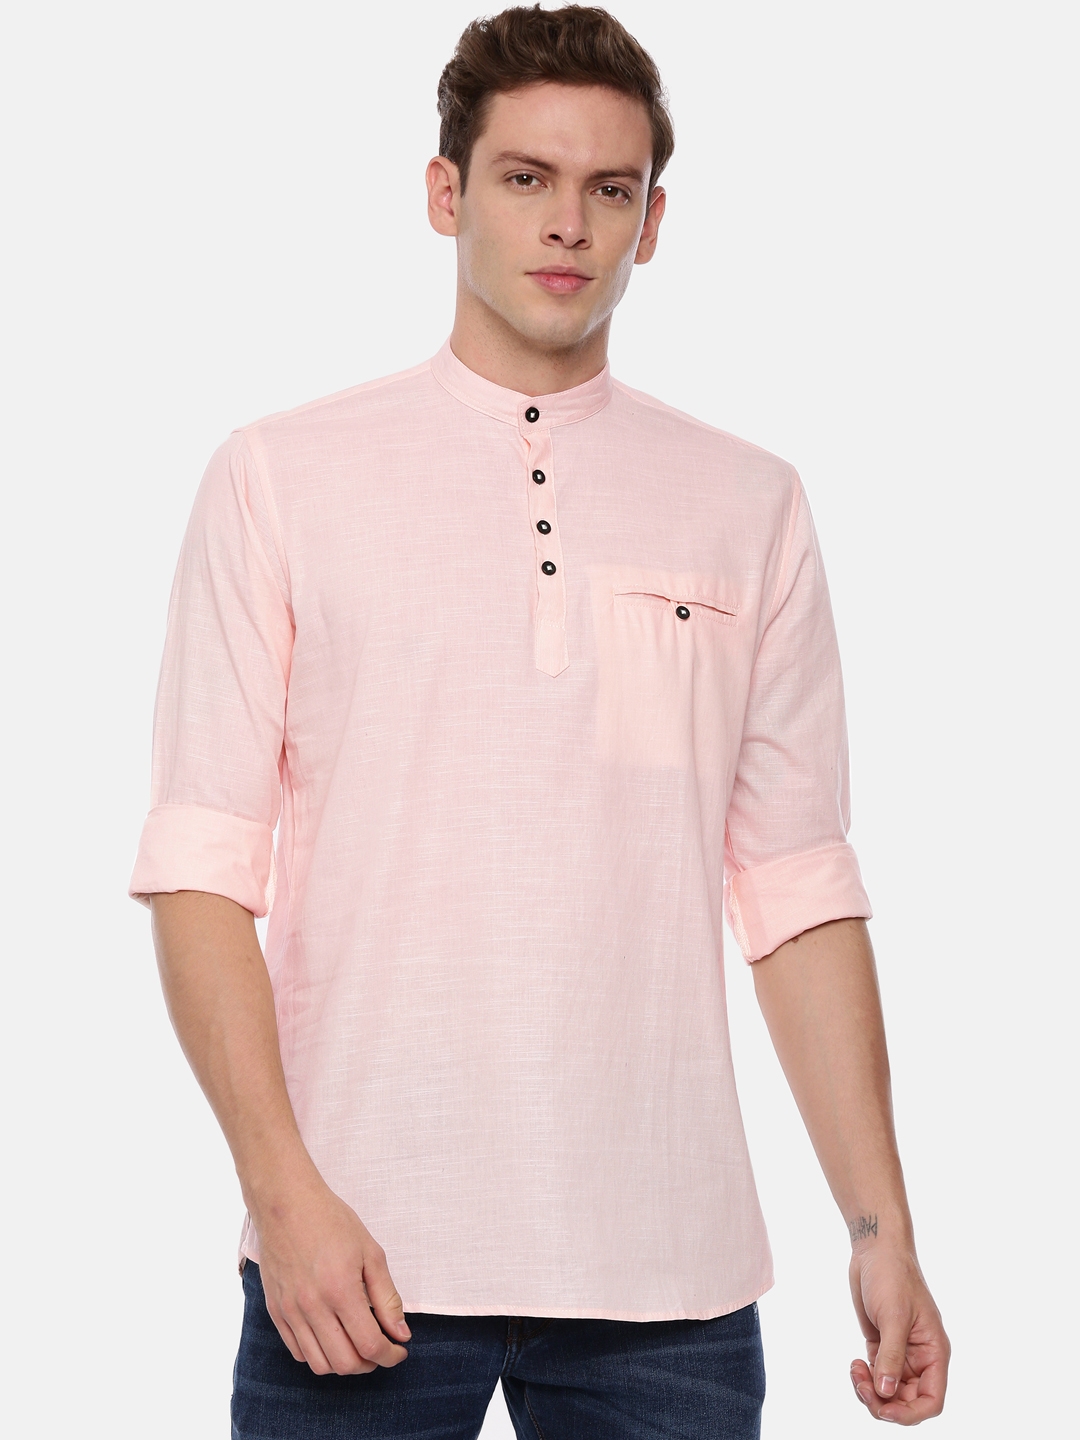 Roller Fashions Men's Cotton Solid Straight Pink Color Short Kurta